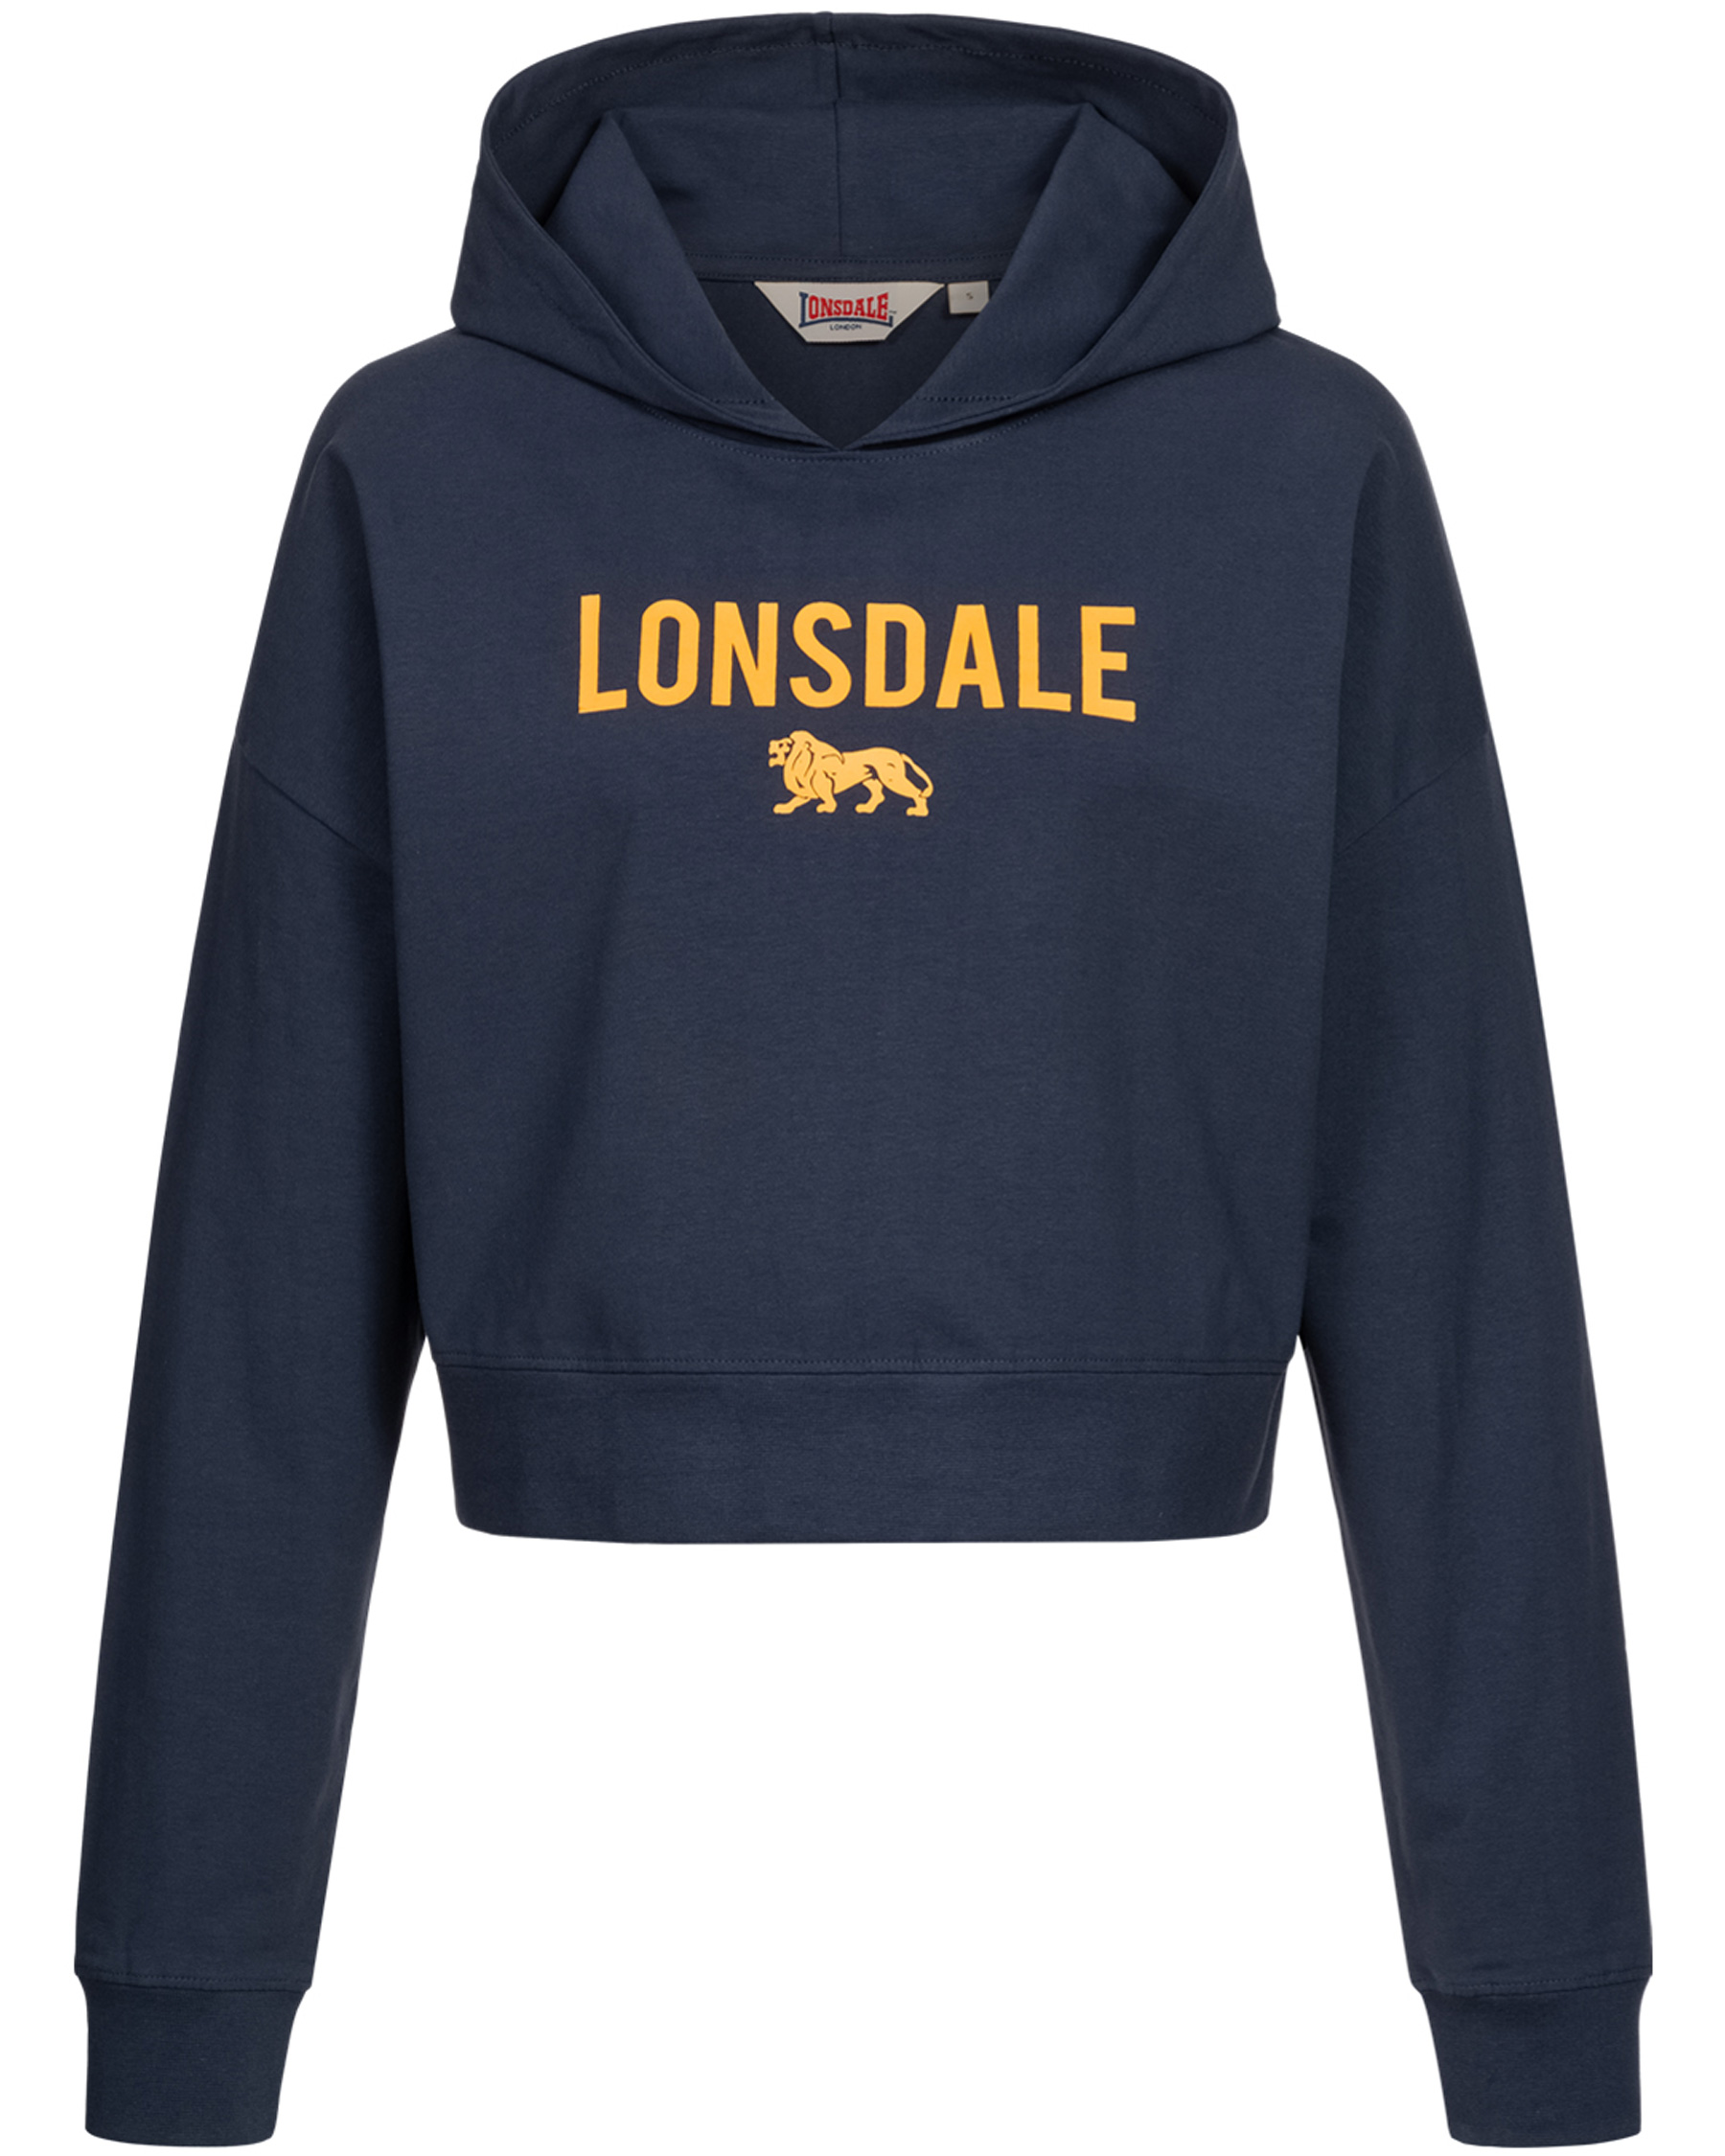 Lonsdale ladies cropped sweatshirt Queenscliff